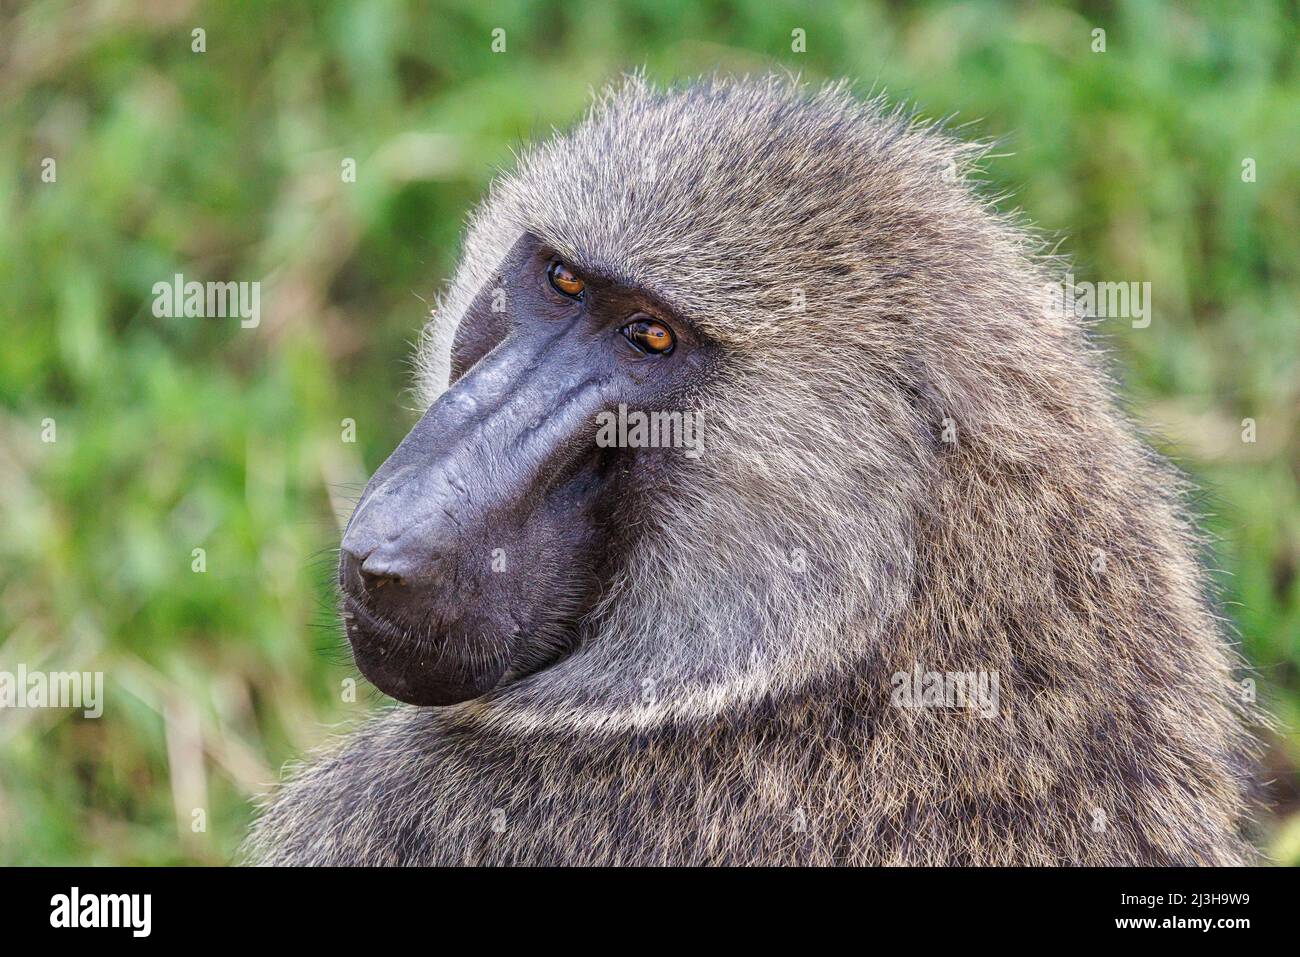 Uganda, Rubirizi district, Katunguru, Queen Elizabeth National Park, baboon Stock Photo